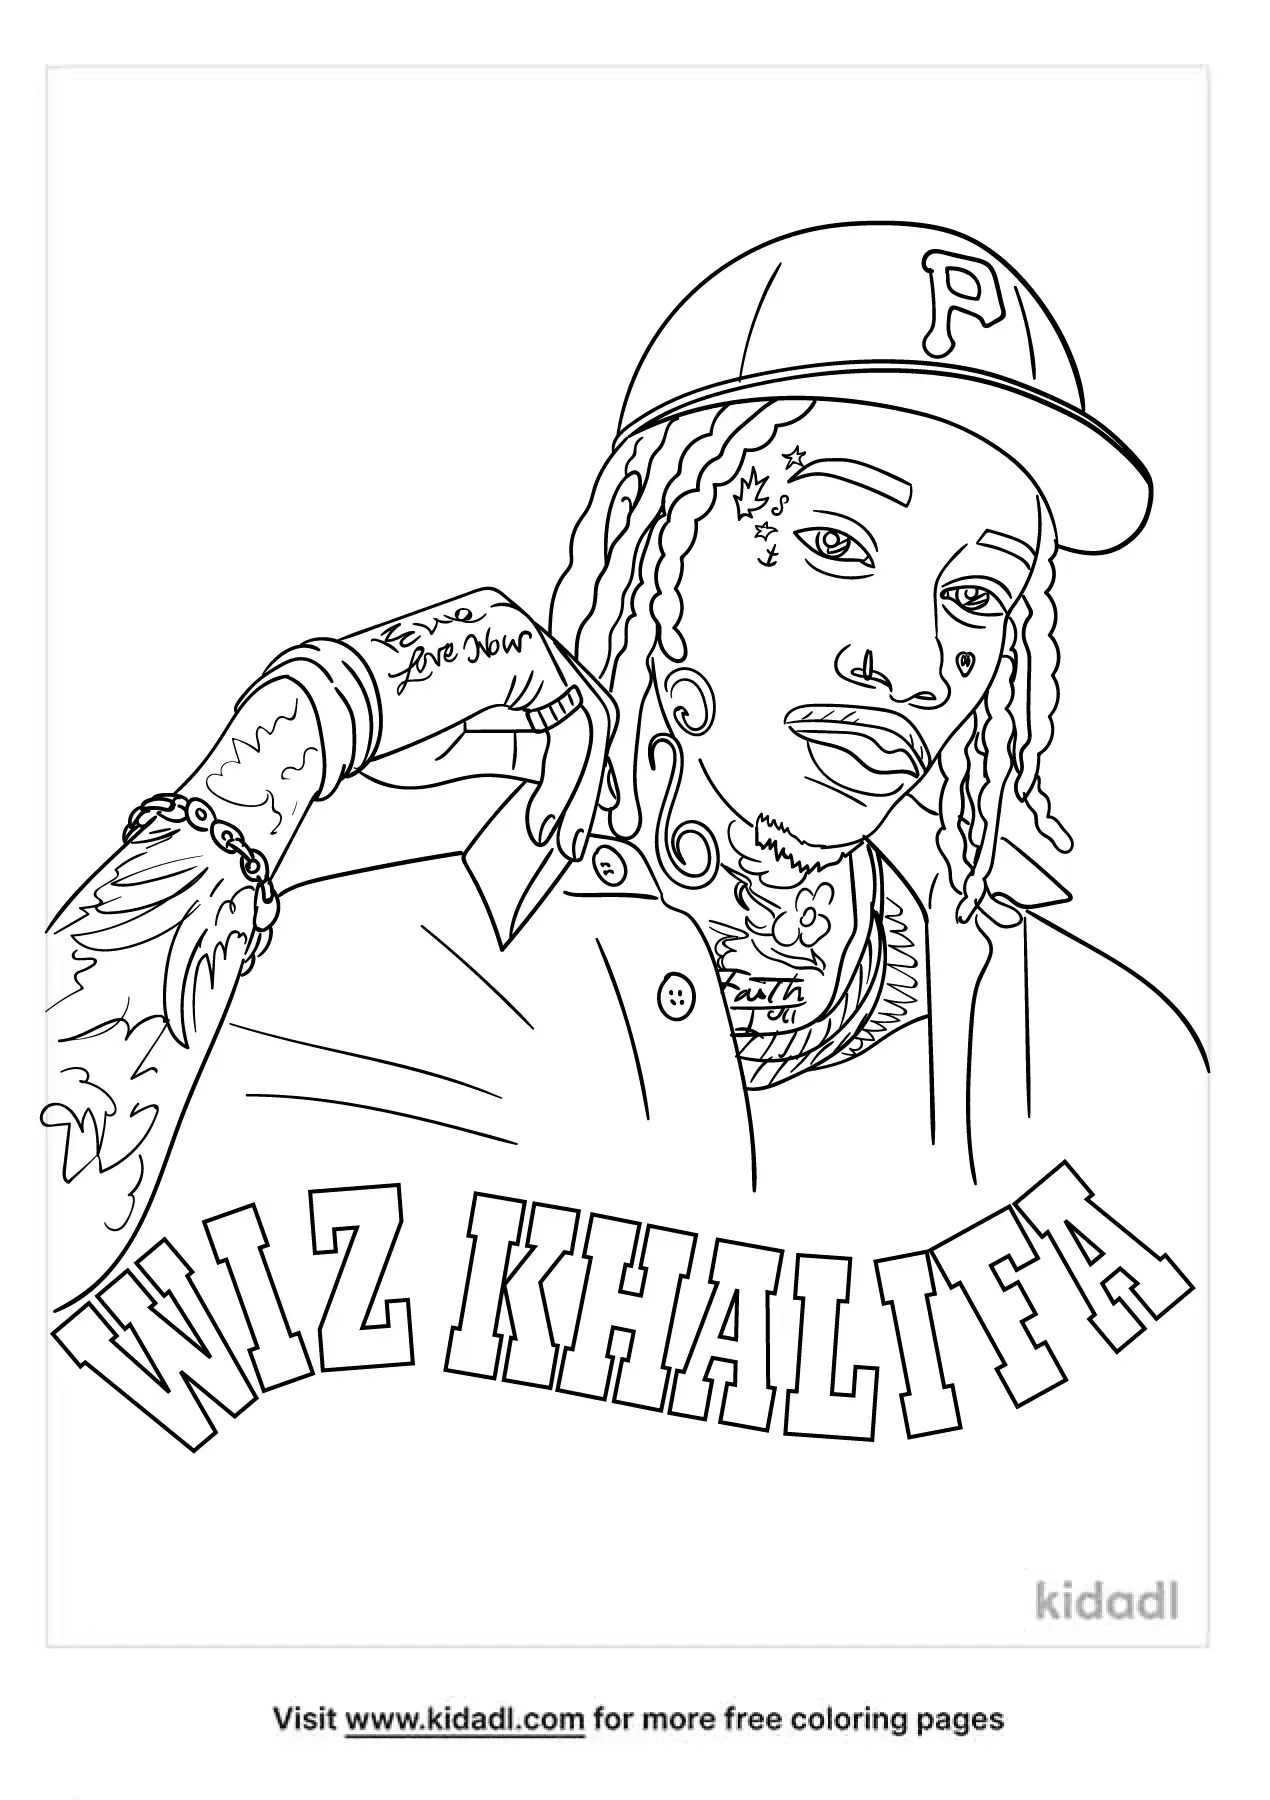 Free Wiz Khalifa Coloring Page | Coloring Page Printables | Kidadl